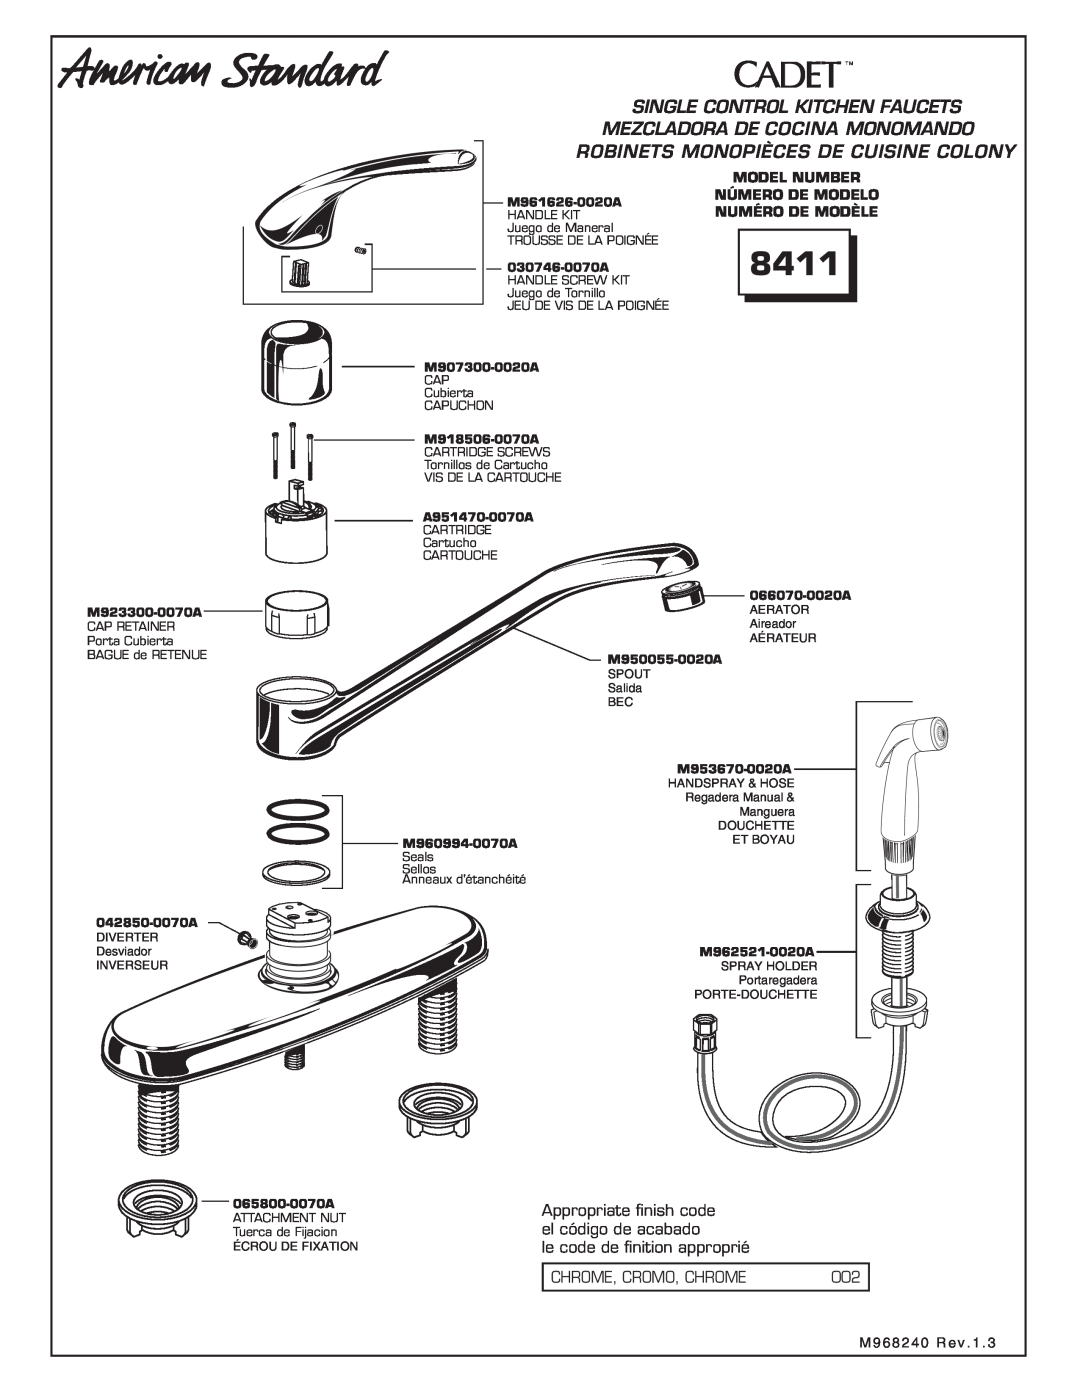 American Standard 8410 manual 8411, Single Control Kitchen Faucets, Mezcladora De Cocina Monomando, Appropriate ﬁnish code 